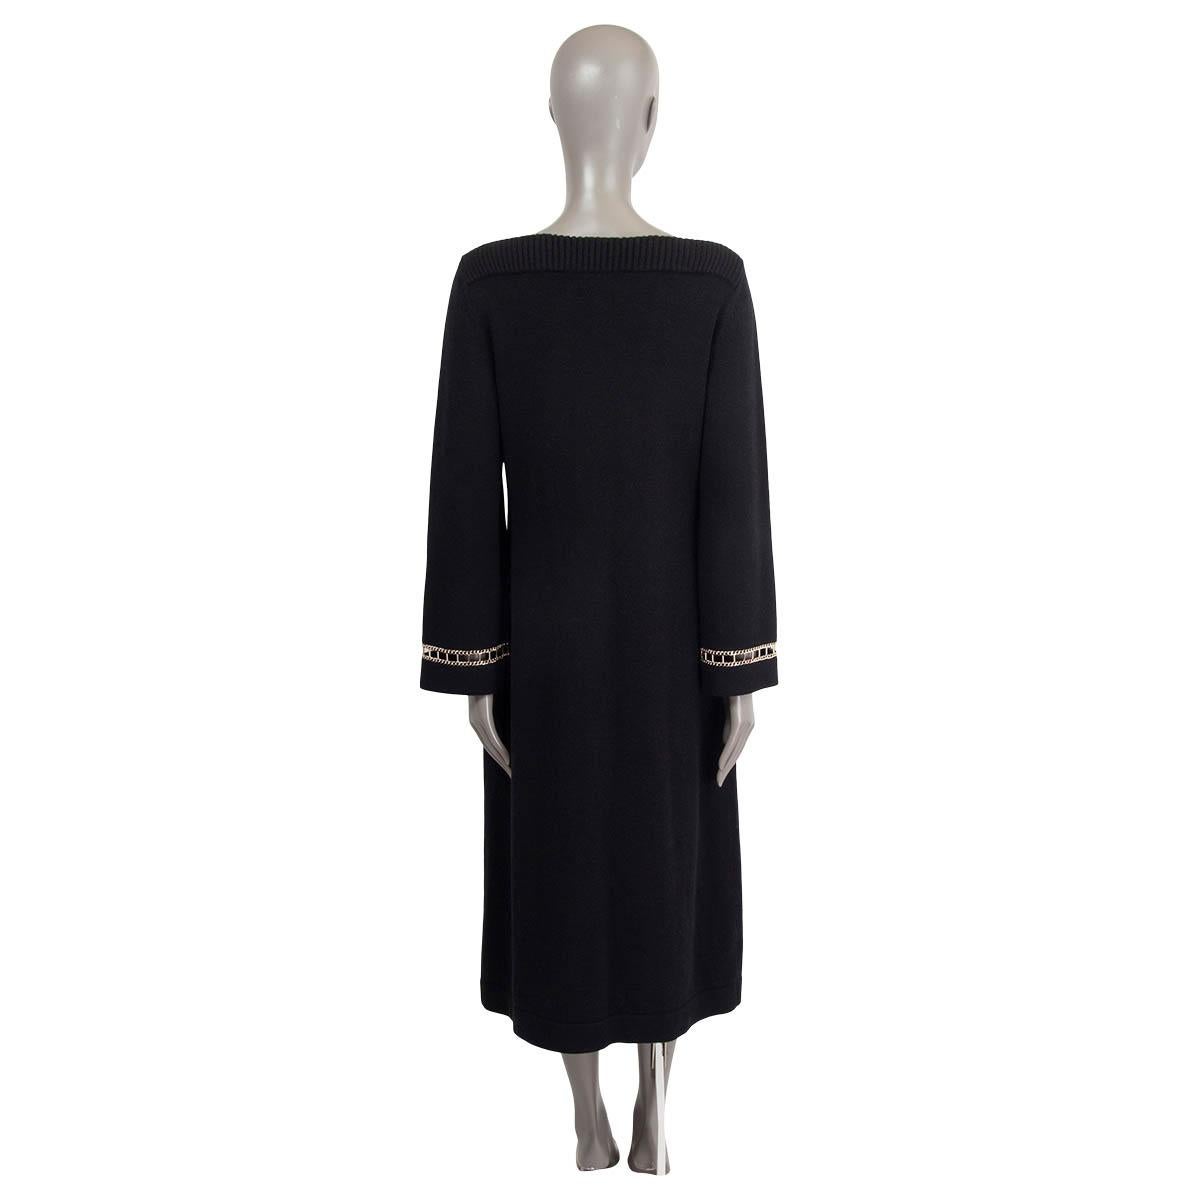 Black CHANEL black cashmere 2020 20C CHAIN LONG SLEEVE MIDI KNIT Dress 38 S For Sale